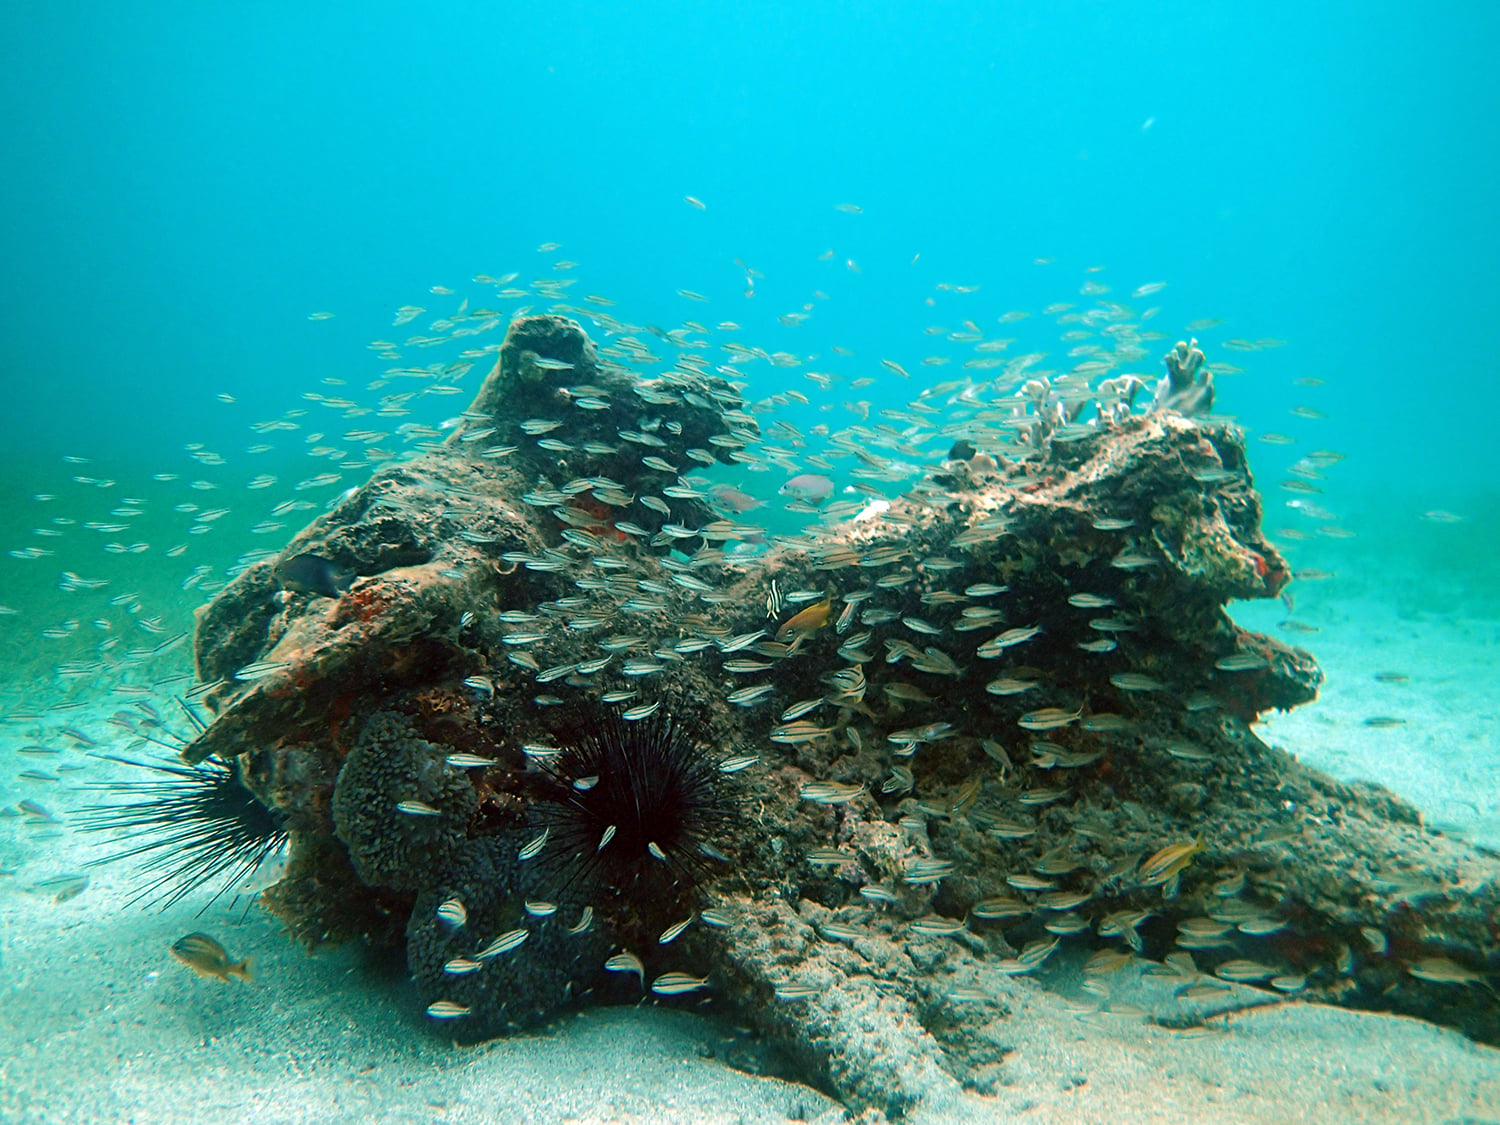 Indian Bay Reef